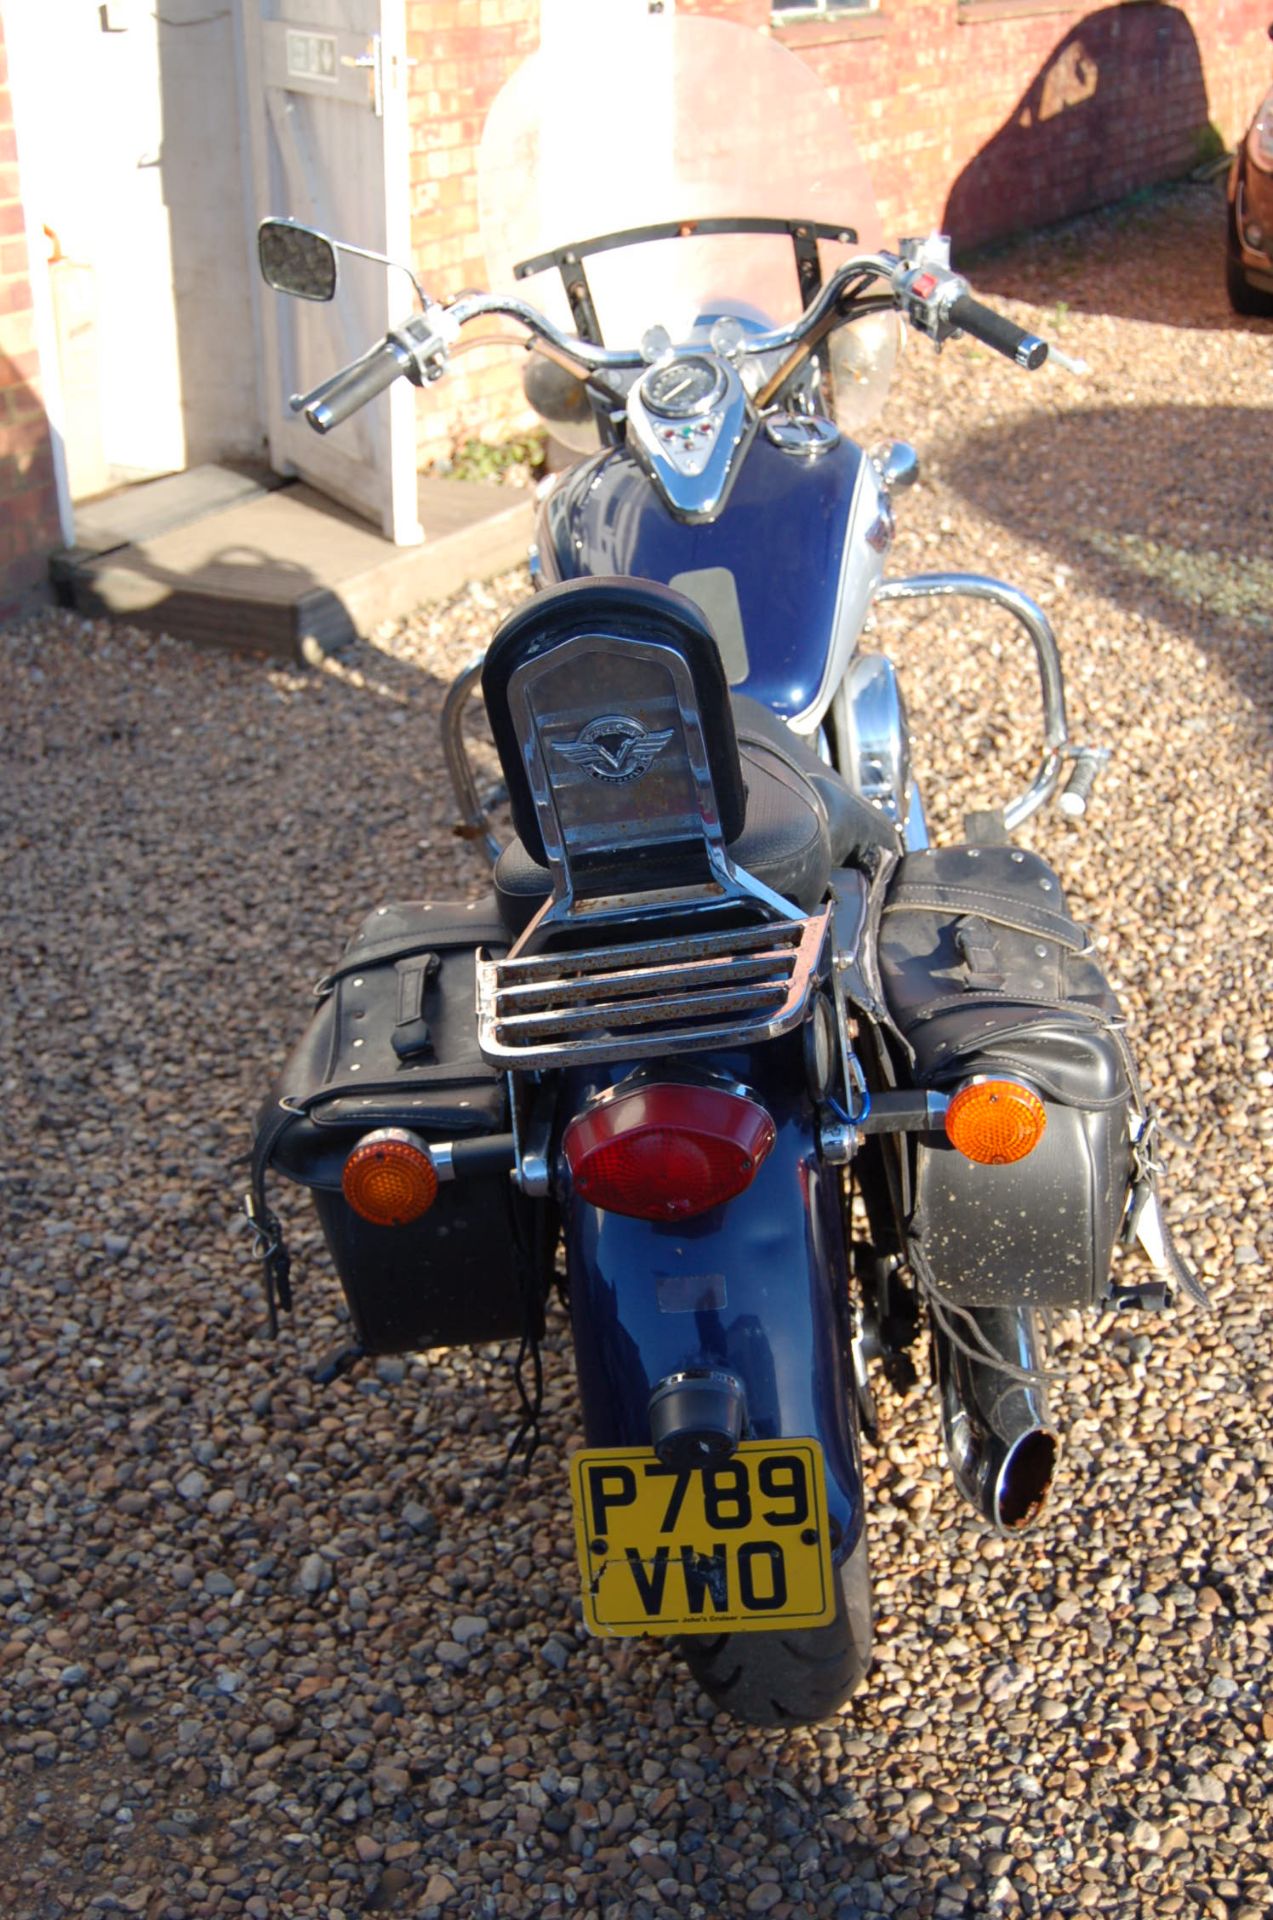 A 1997 KAWASAKI VN800 Classic 805cc V-Twin 8-Valve Cruiser Style Motorcycle, Registration No. P789 V - Image 3 of 6